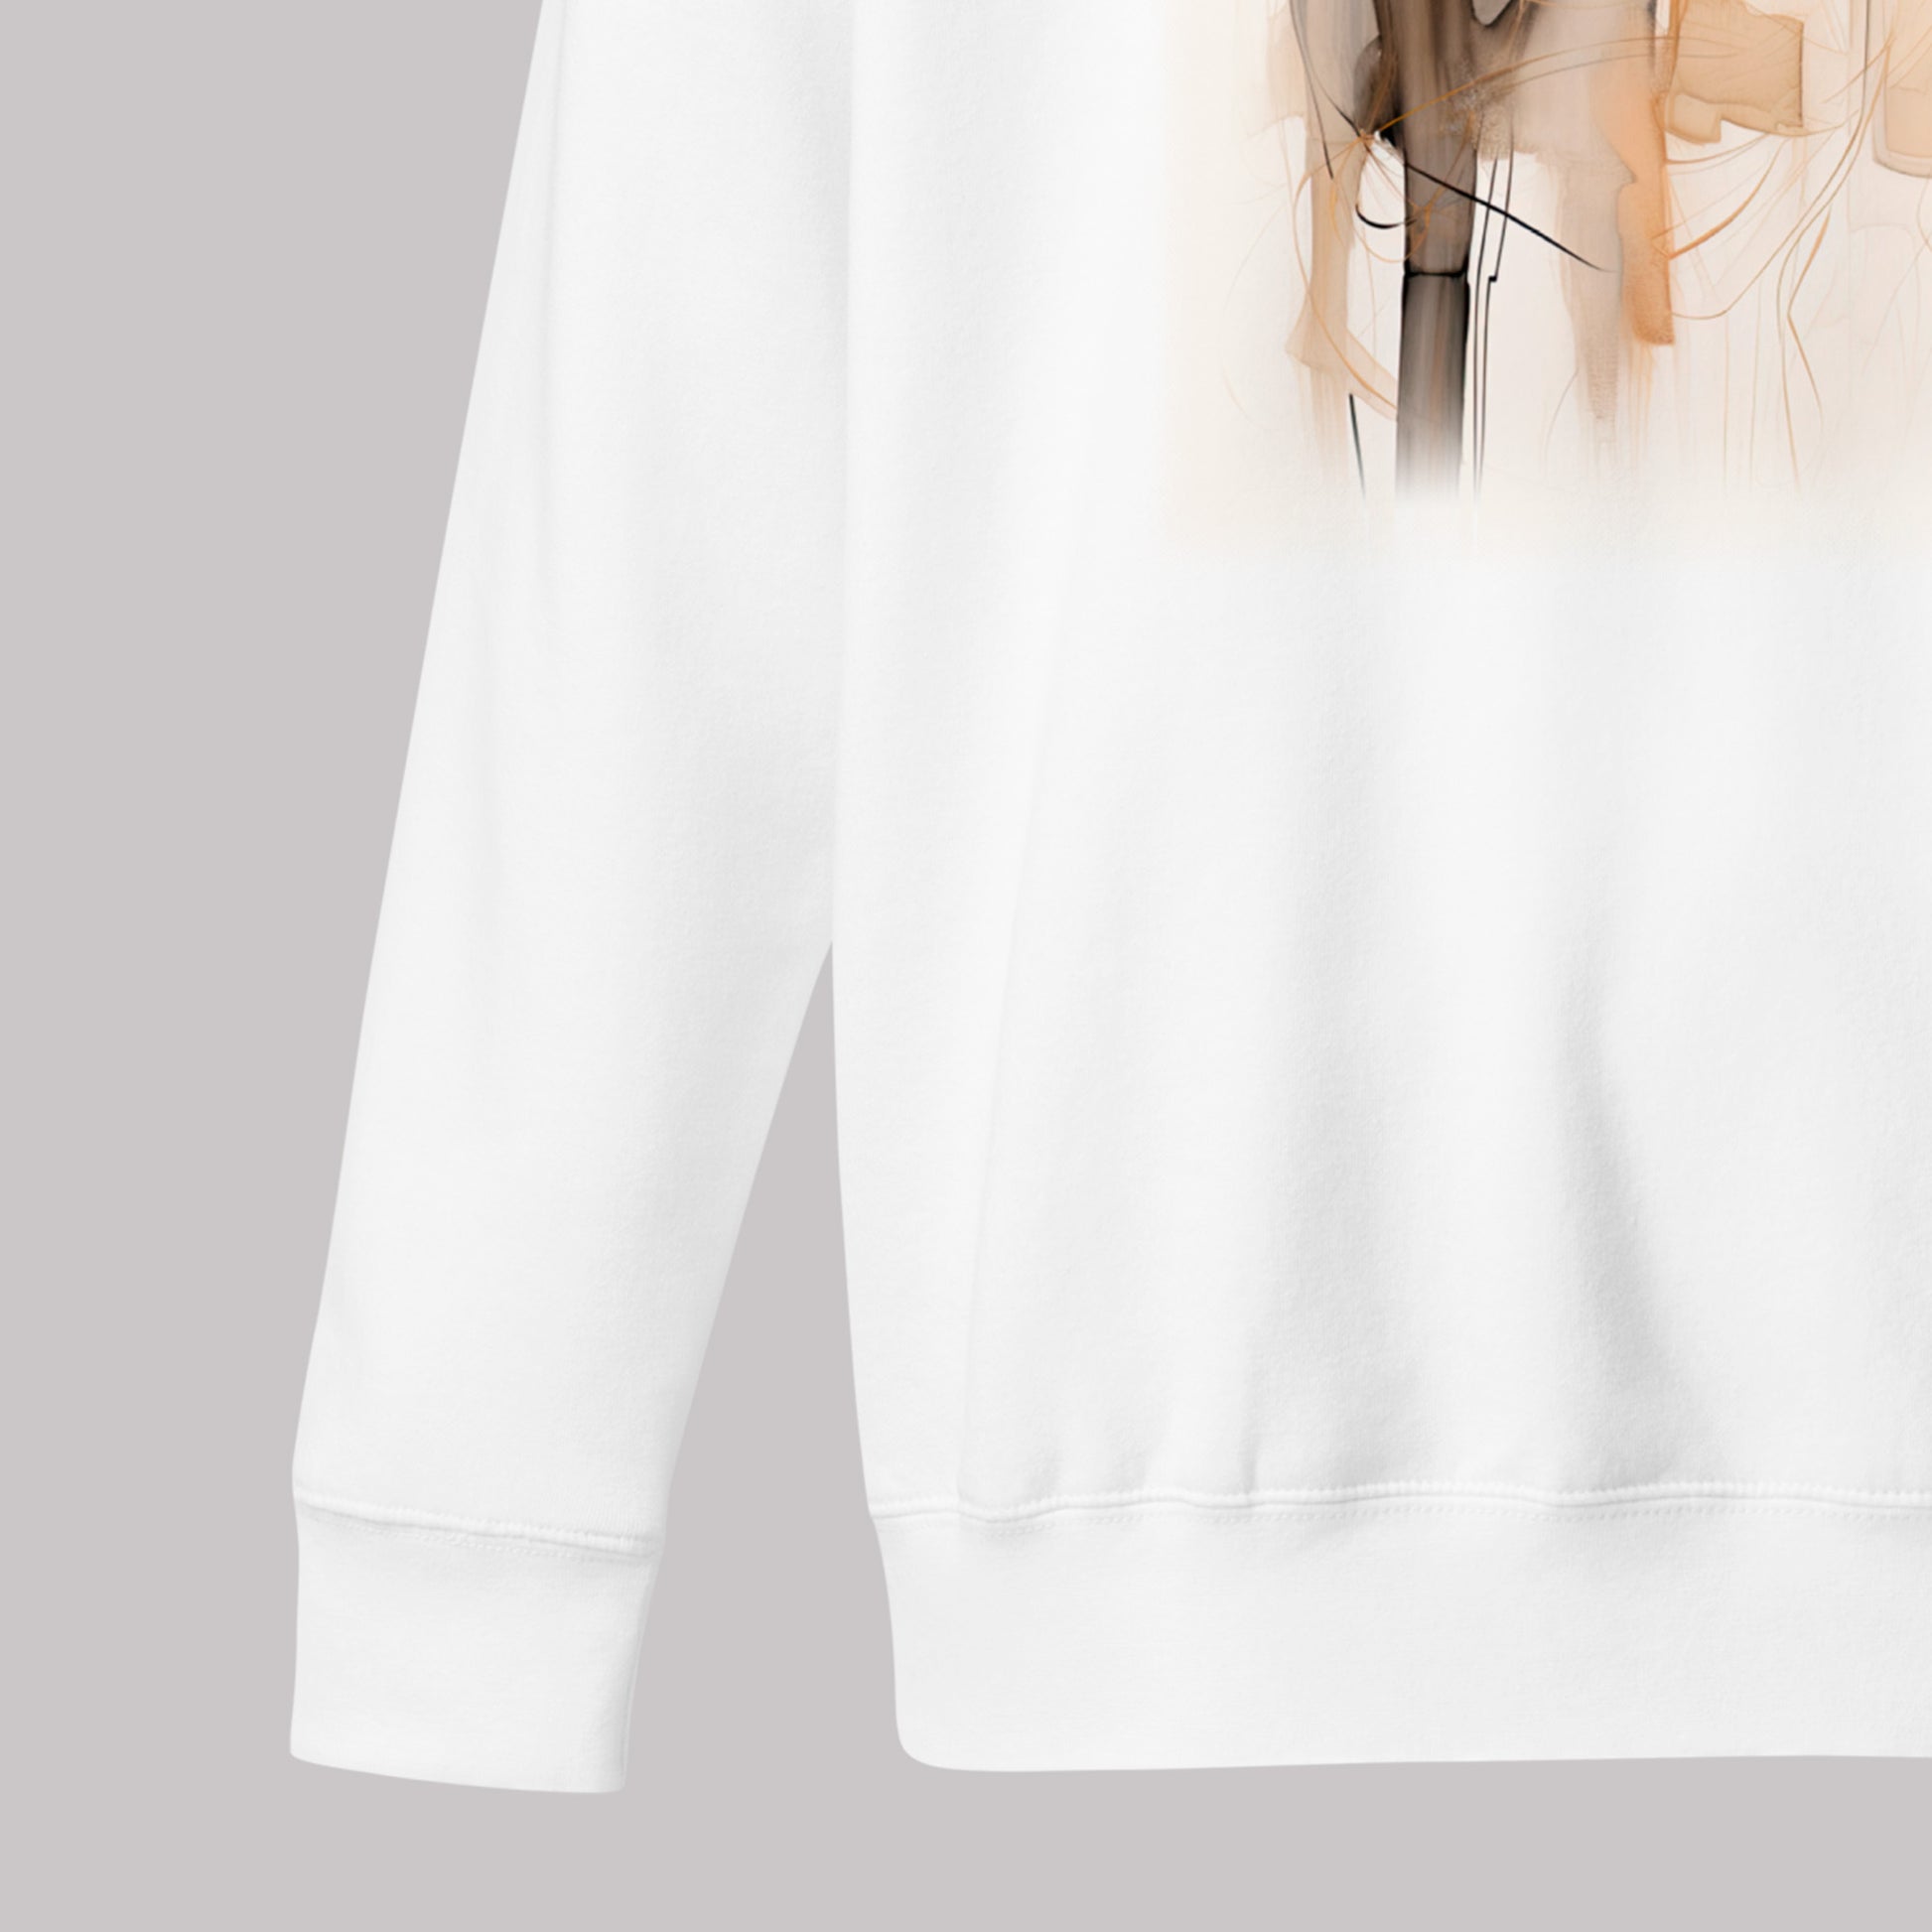 sleeve detail on Serene Equine Unisex Premium Sweatshirt